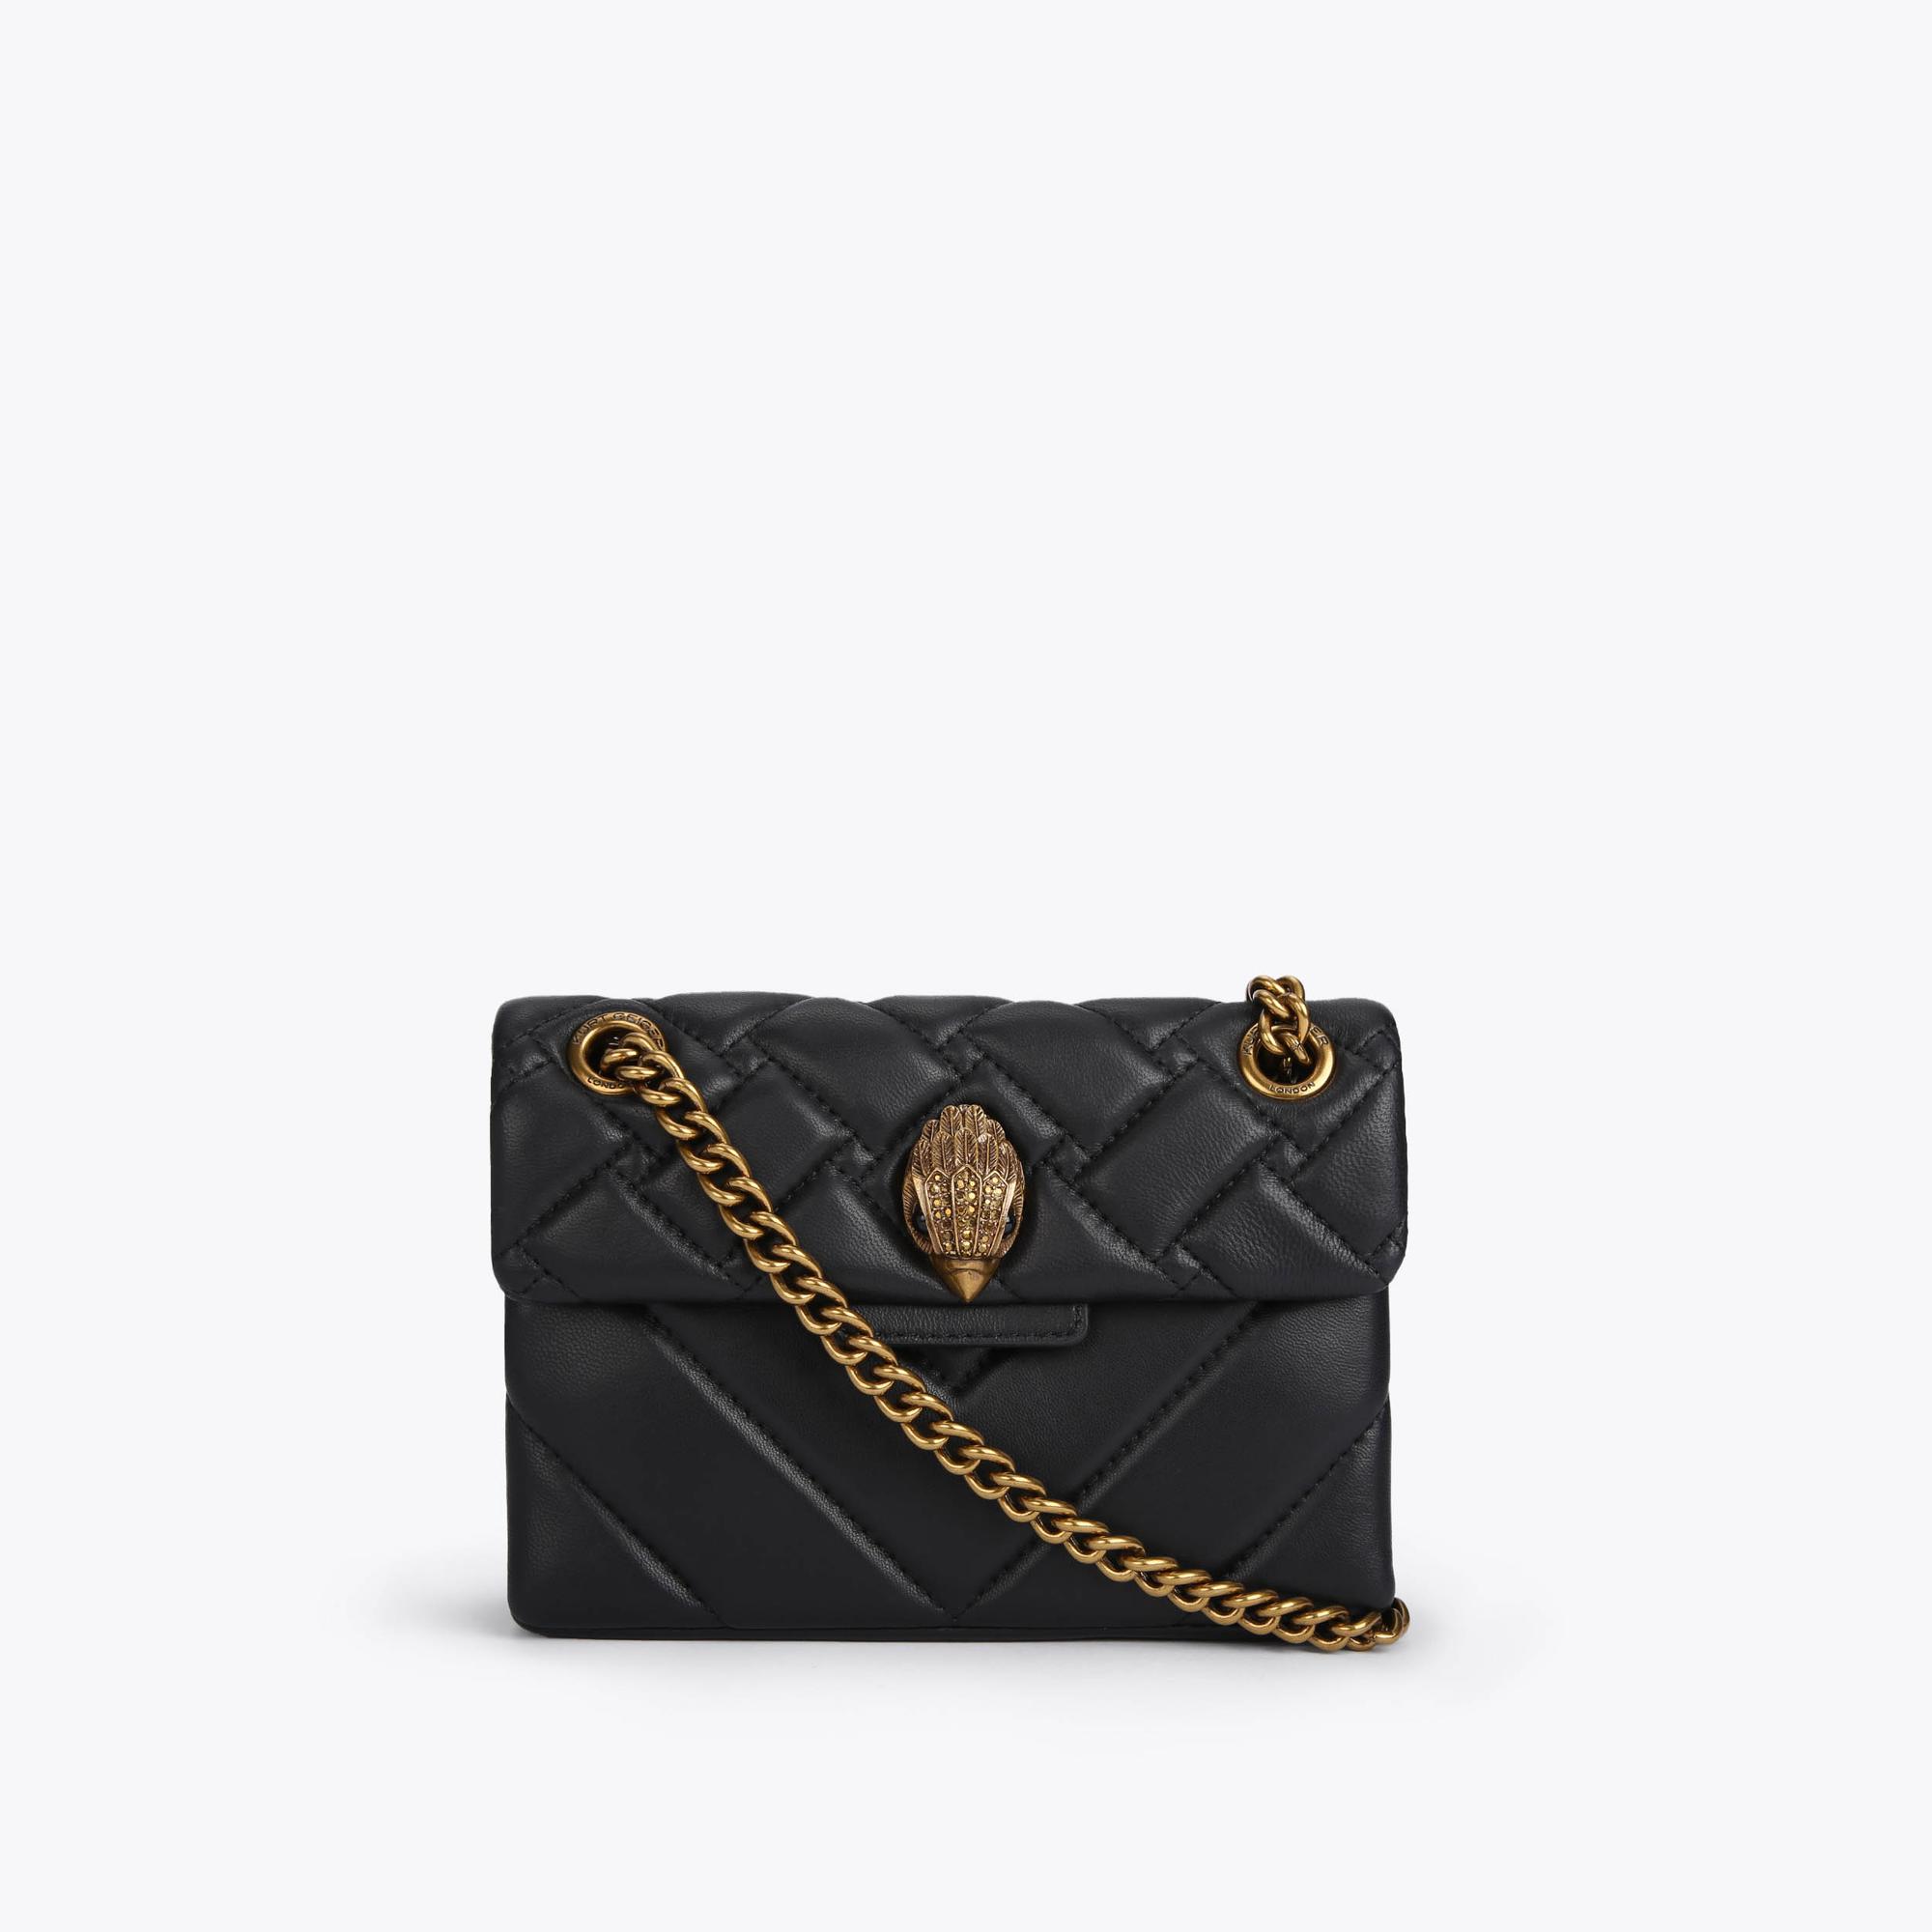 MINI KENSINGTON X BAG Black Comb Quilted Leather Mini Bag by KURT GEIGER LONDON